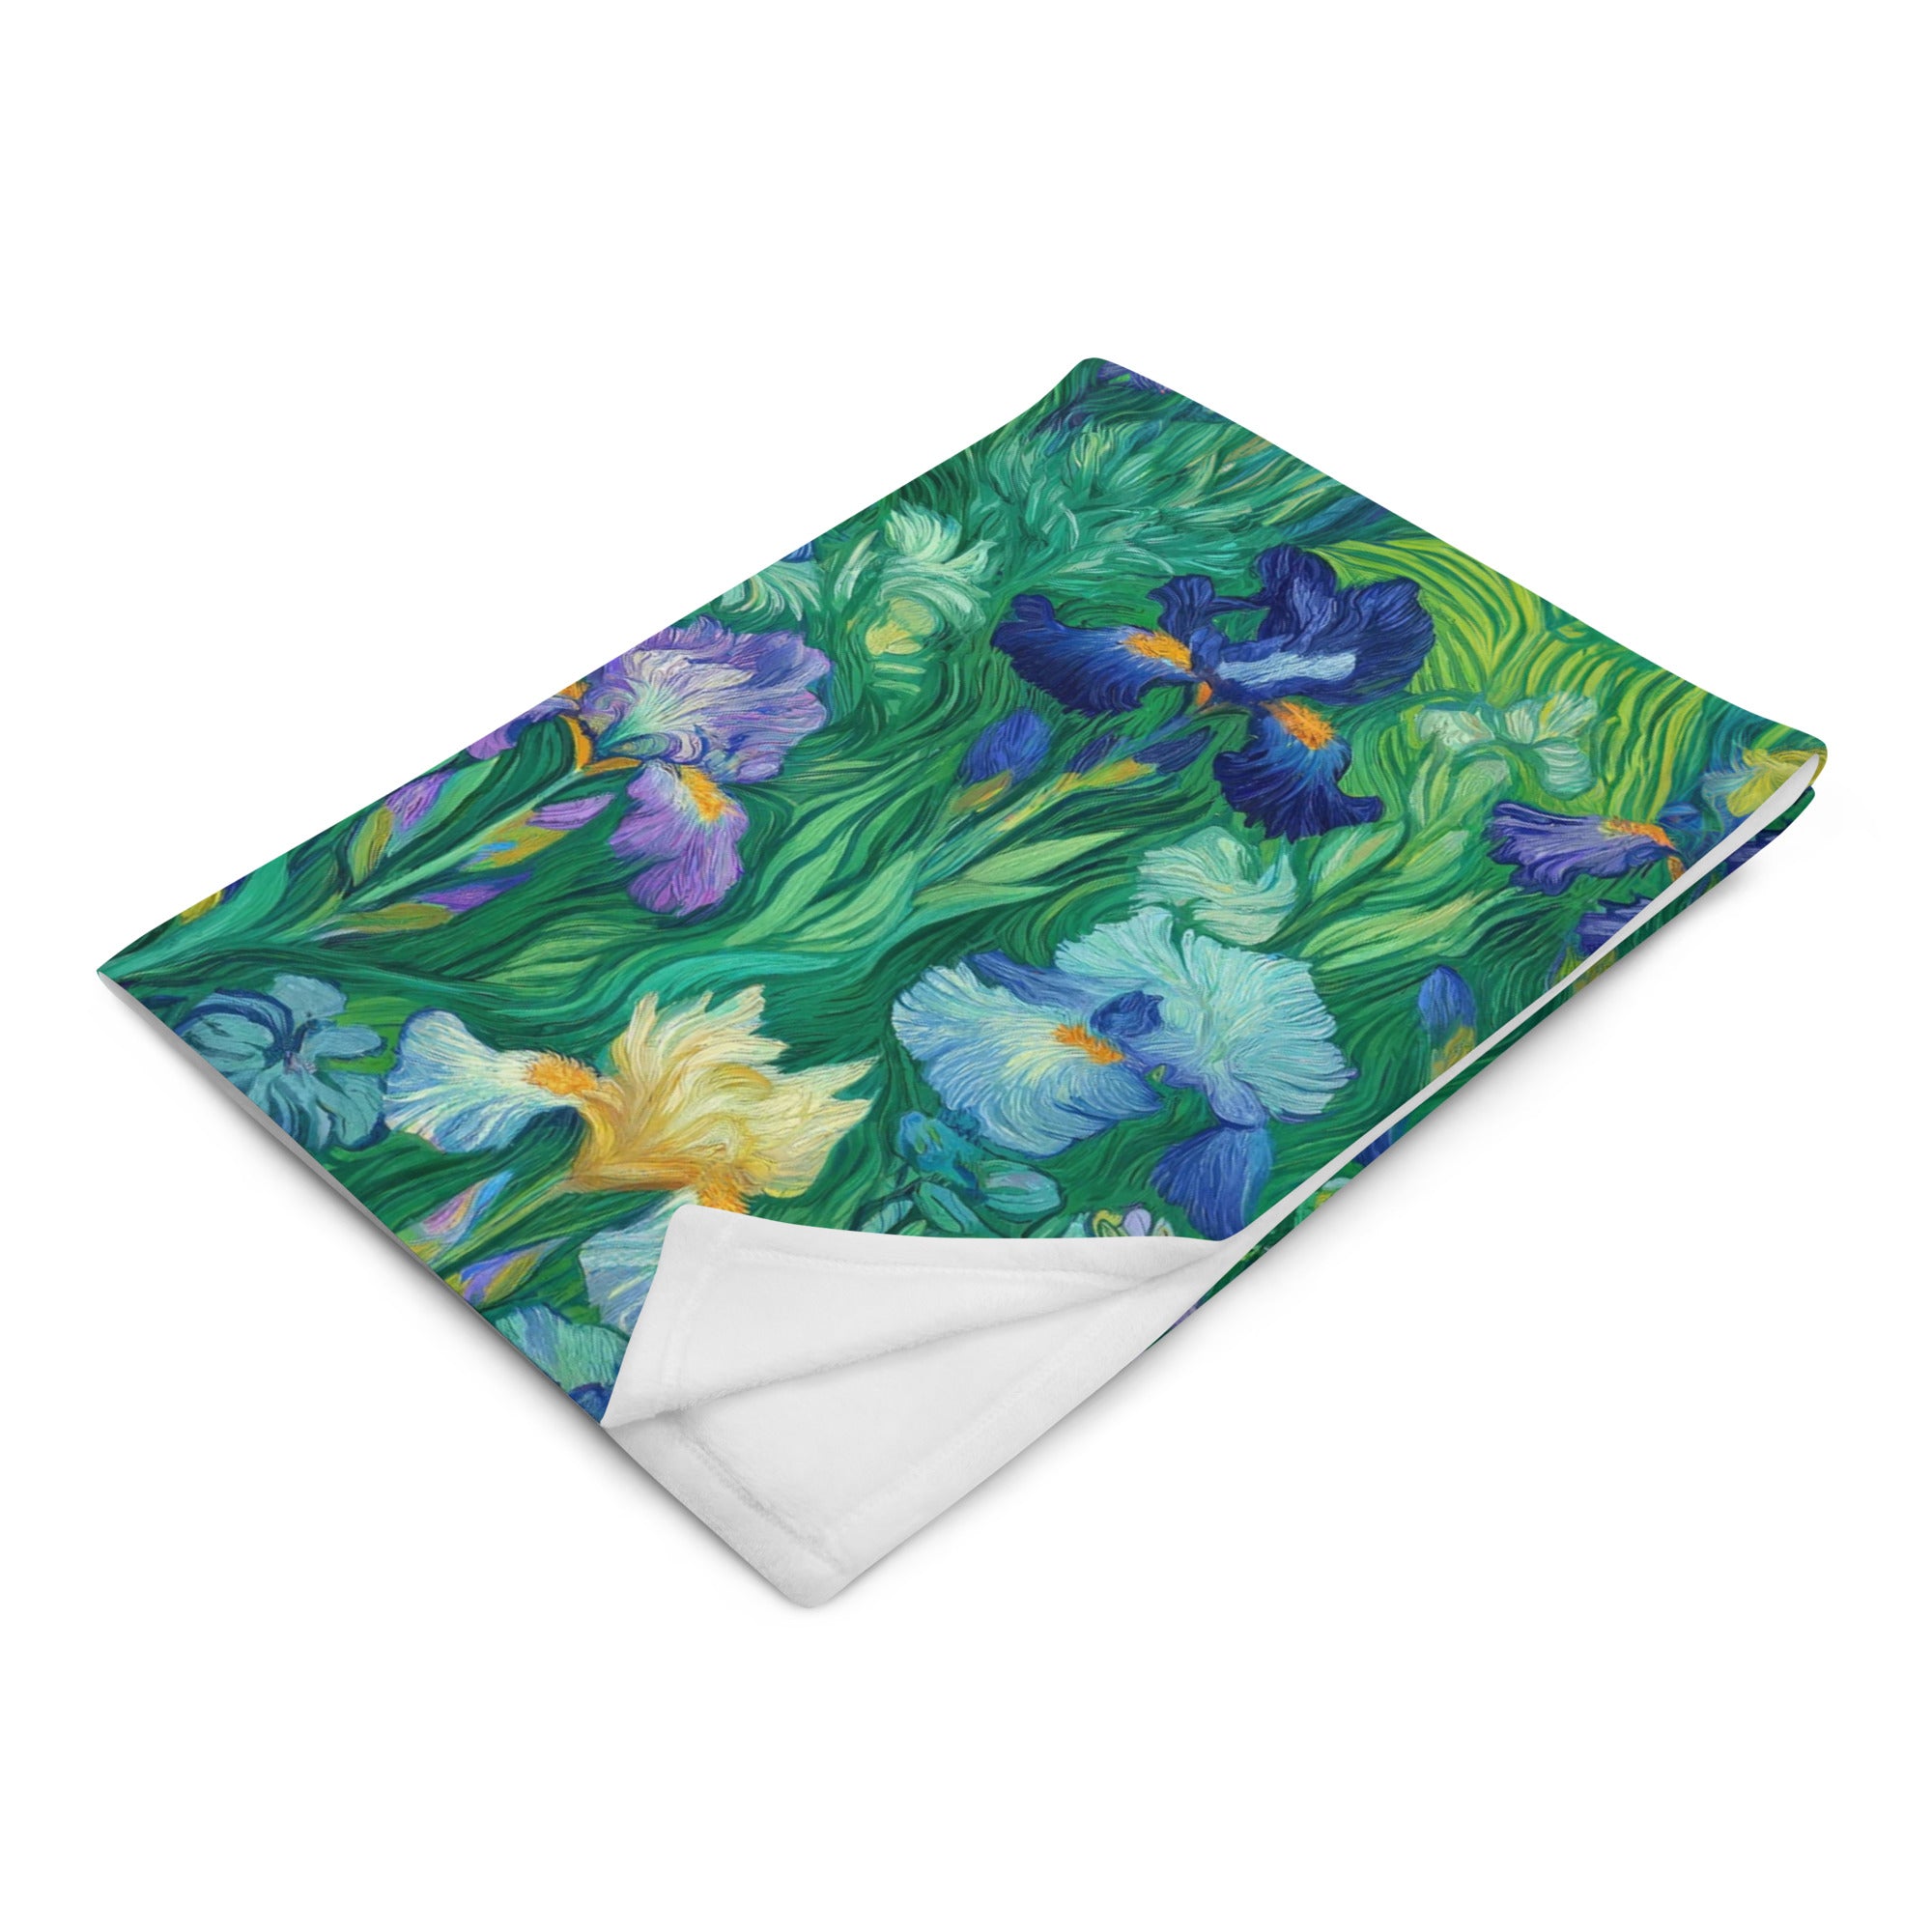 Vincent van Gogh 'Irises' Famous Painting Throw Blanket | Premium Art Throw